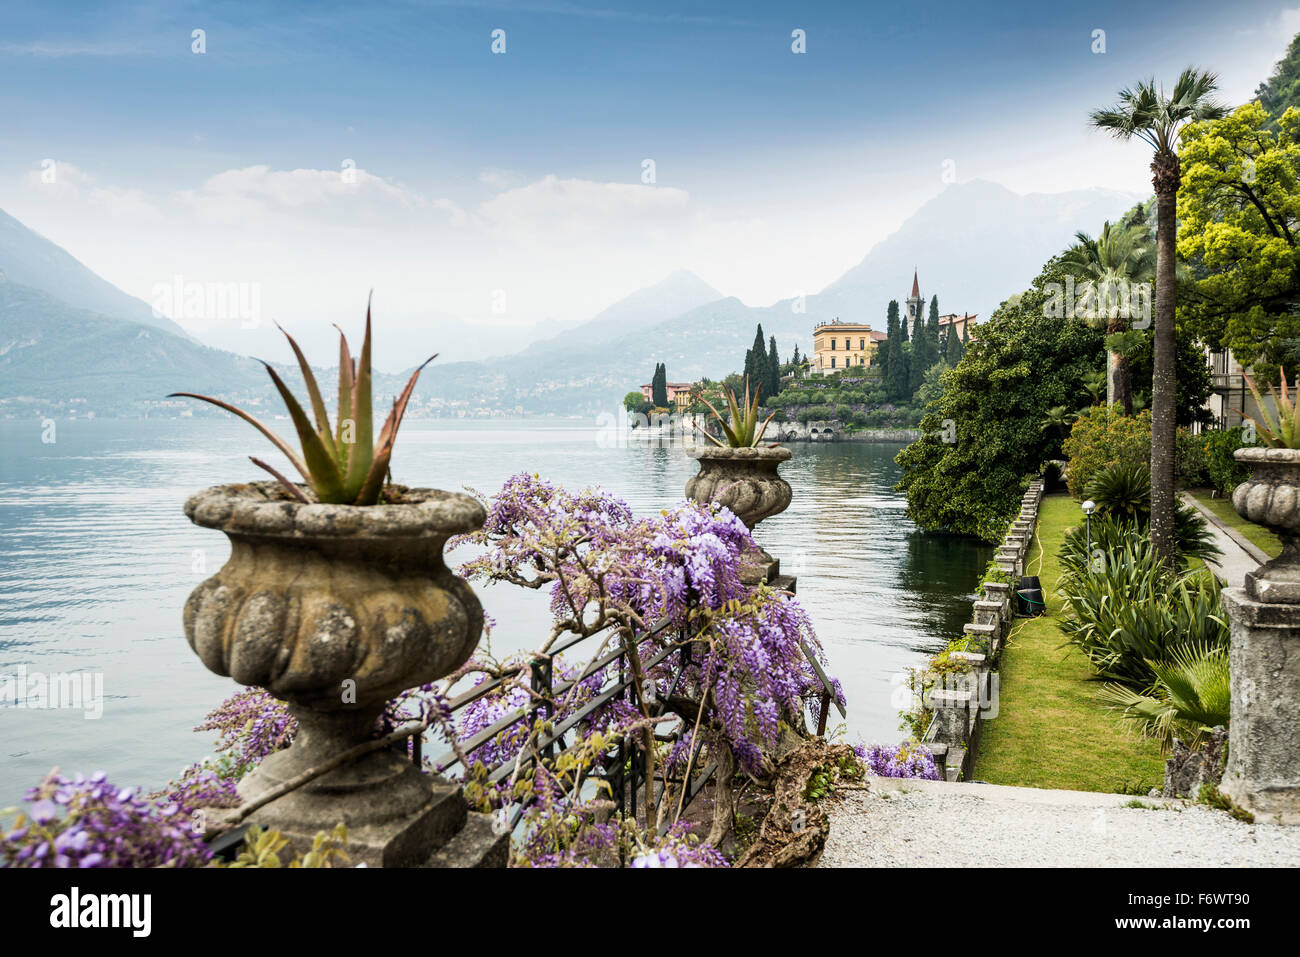 Les jardins de Villa Monastero, Varenna, Lac de Côme, Lago di Como, province de Lecco, Lombardie, Italie Banque D'Images